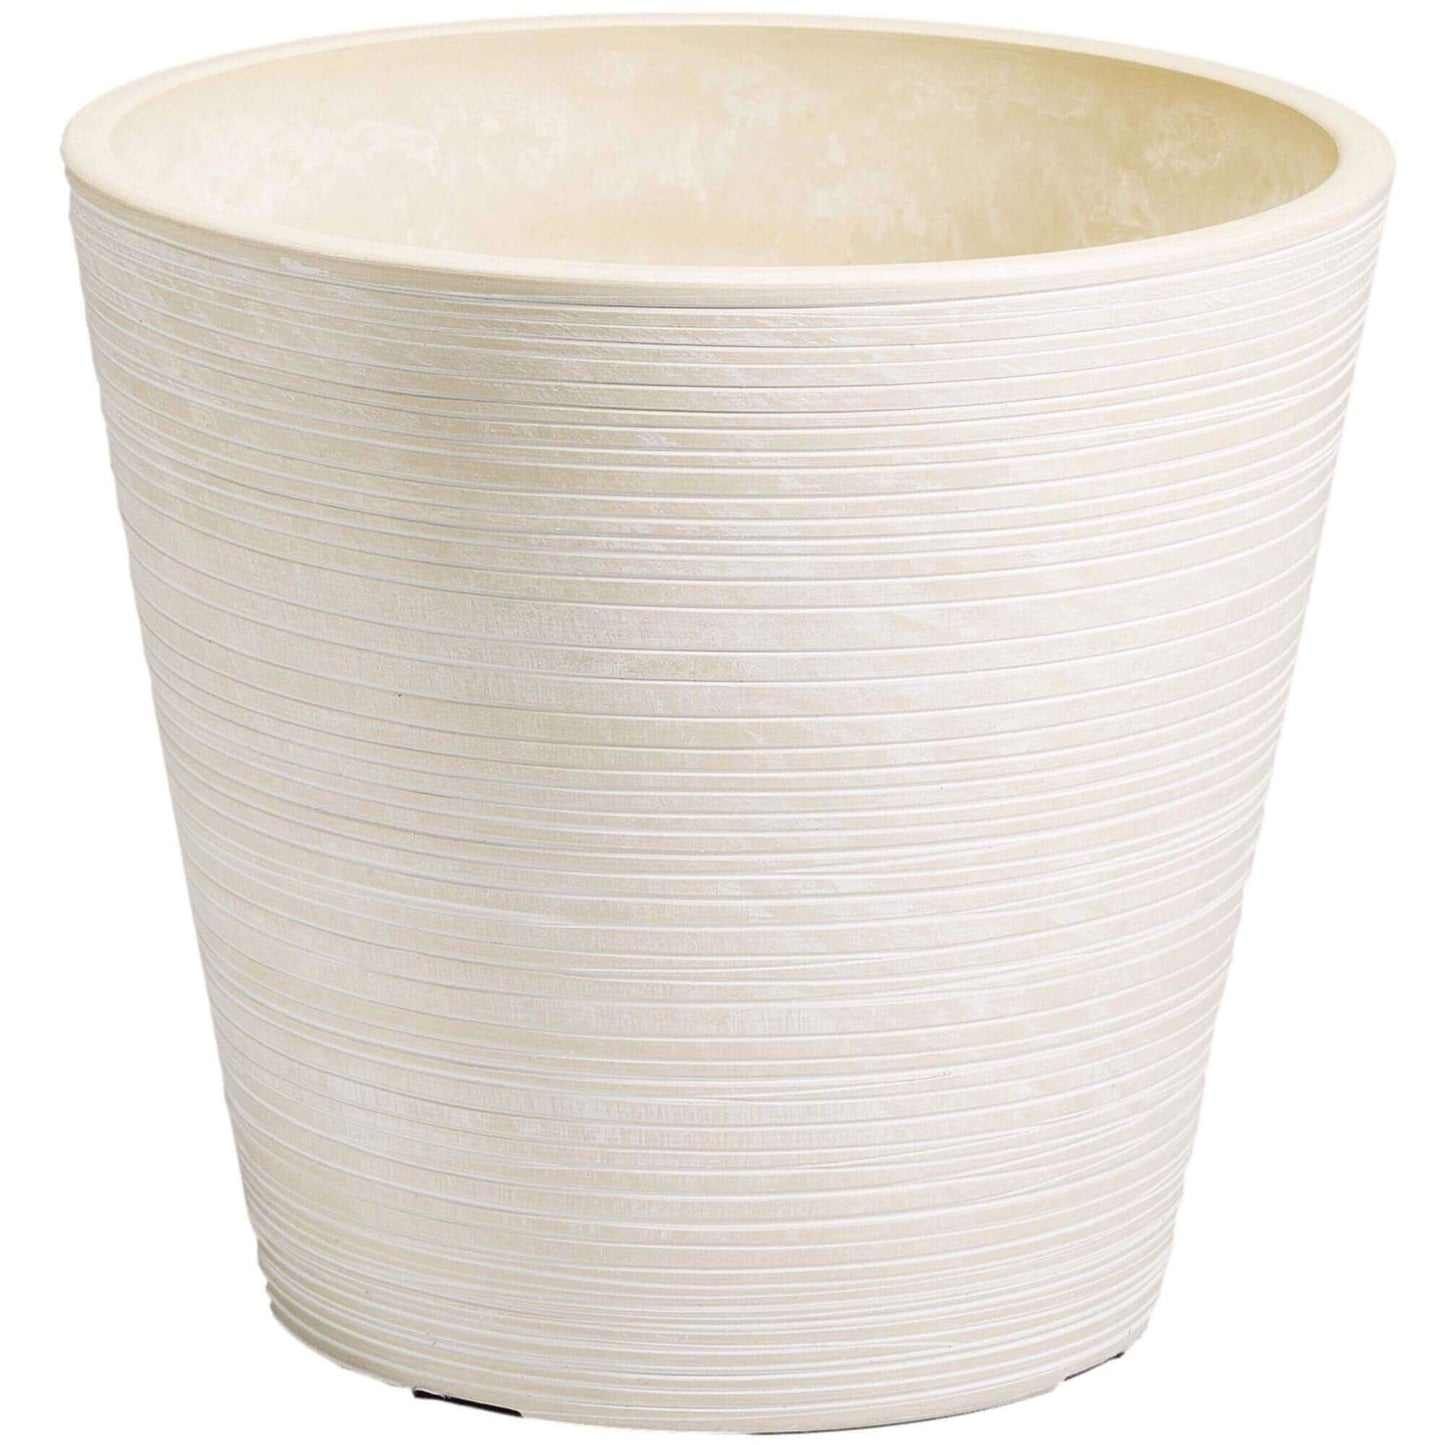 Cream and White Engraved Pot (17cm)